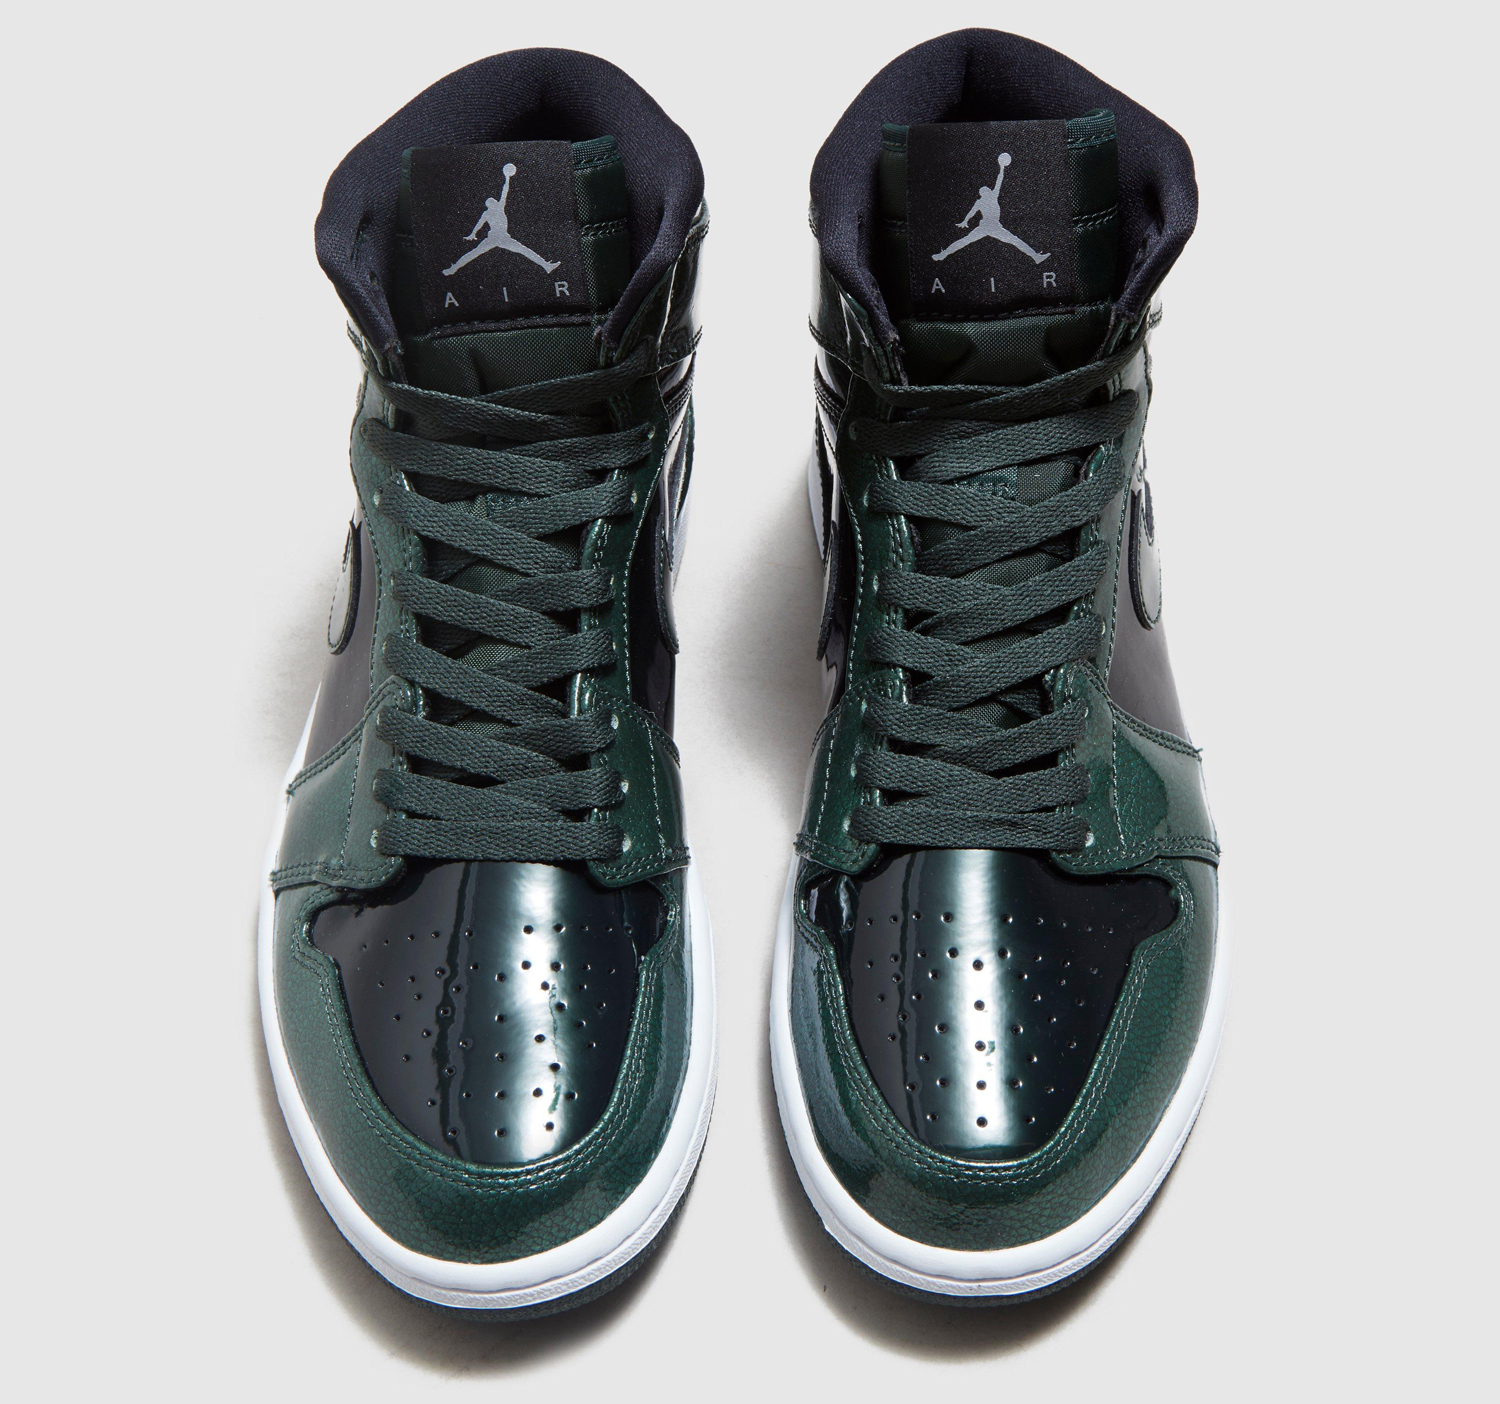 Air Jordan 1 Gorge Green Patent Leather 332550-300 Top